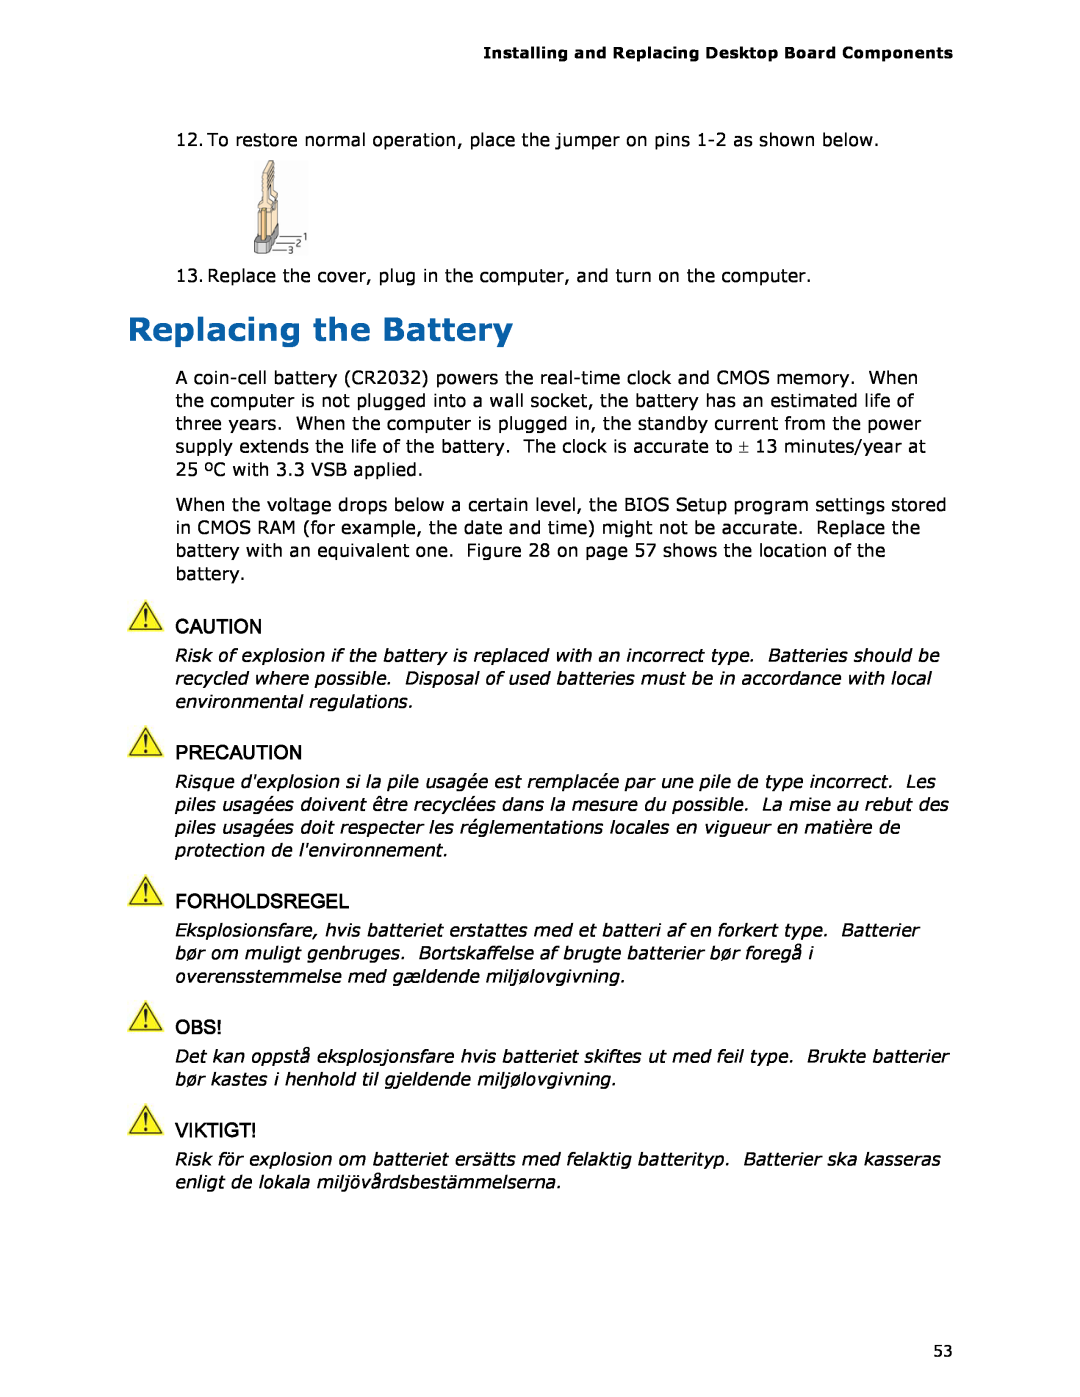 Intel DG35EC, Intel Desktop Board manual Replacing the Battery, Precaution, Forholdsregel, Viktigt 